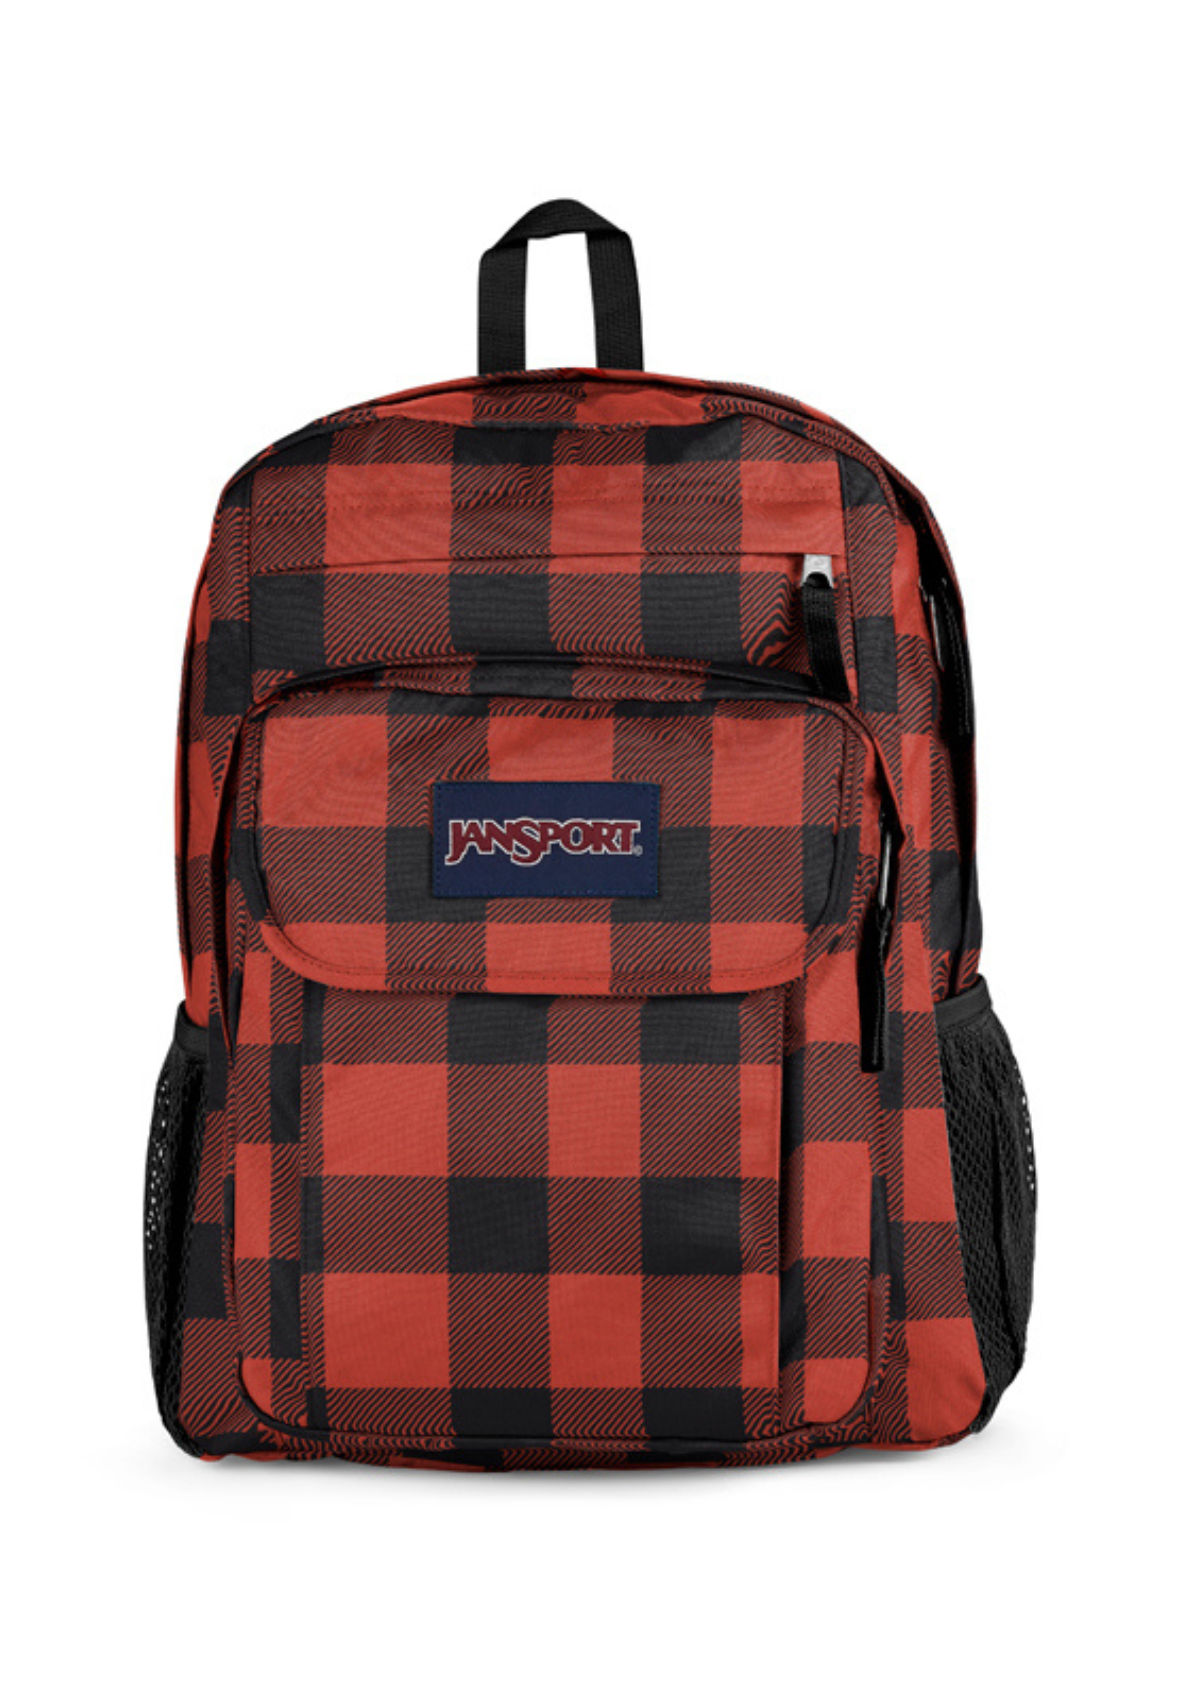 JanSport Backpacks Union Pack Flannel